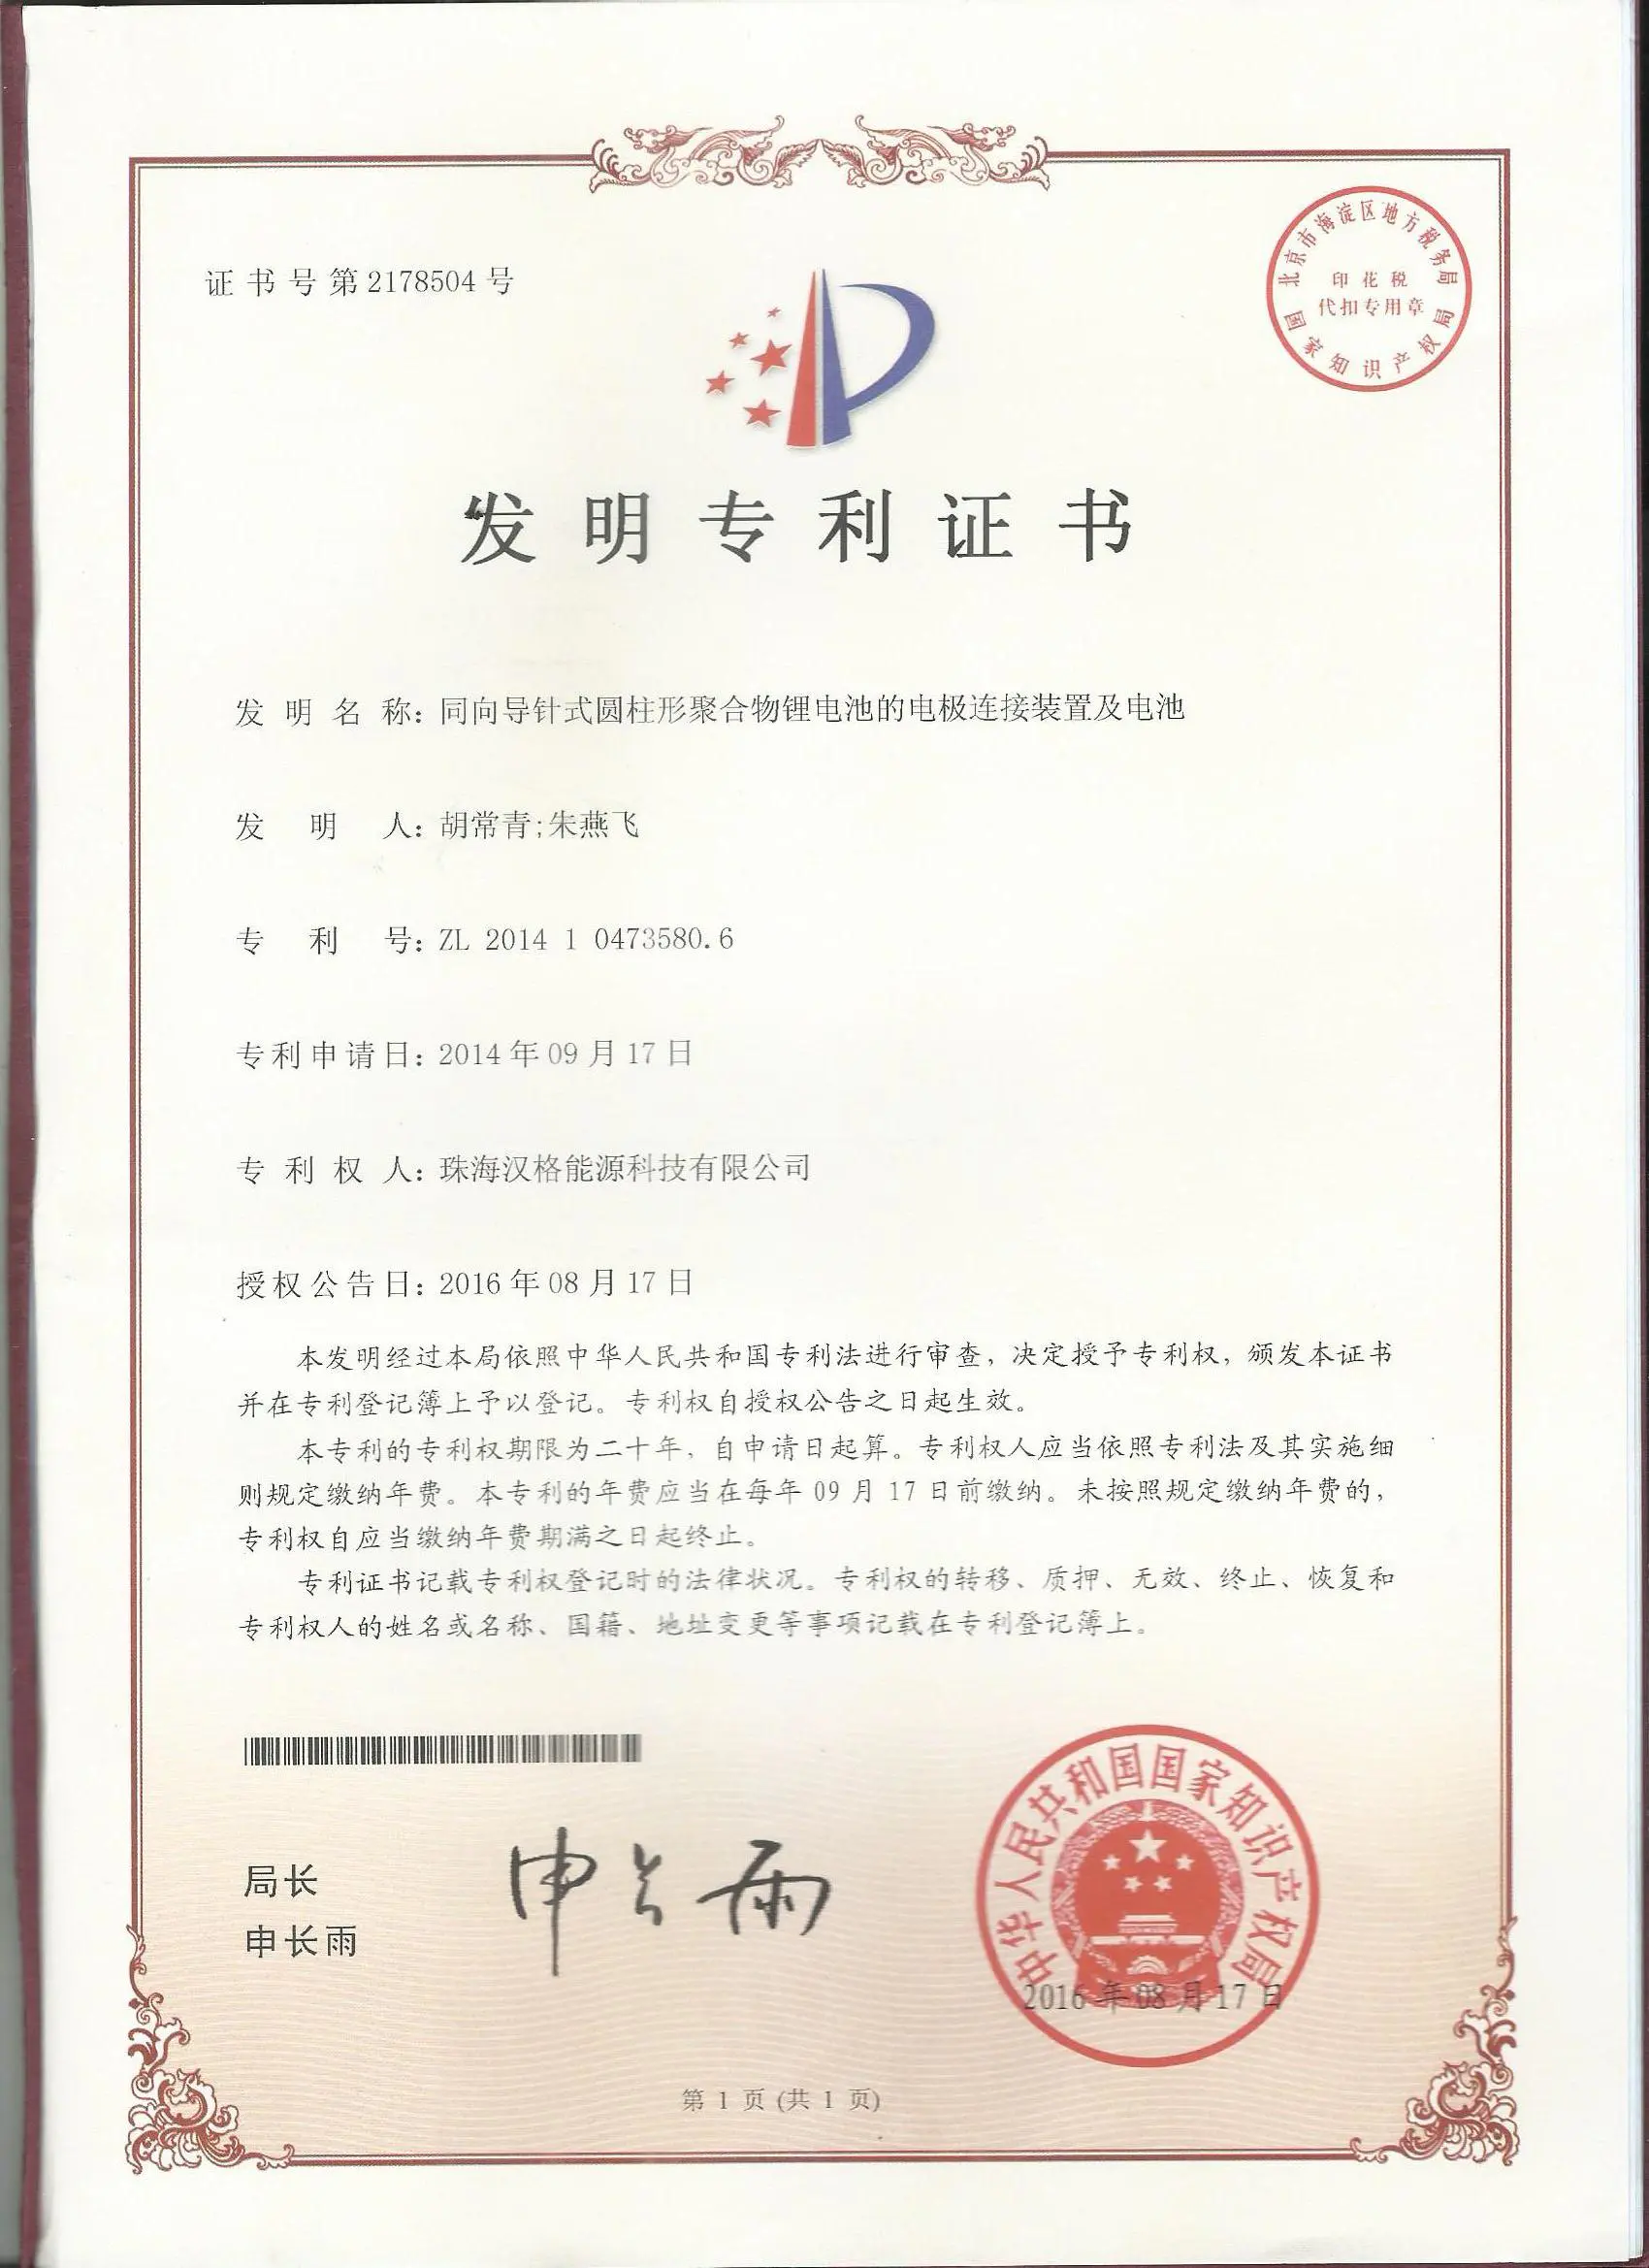 Utility model patent certificate 8